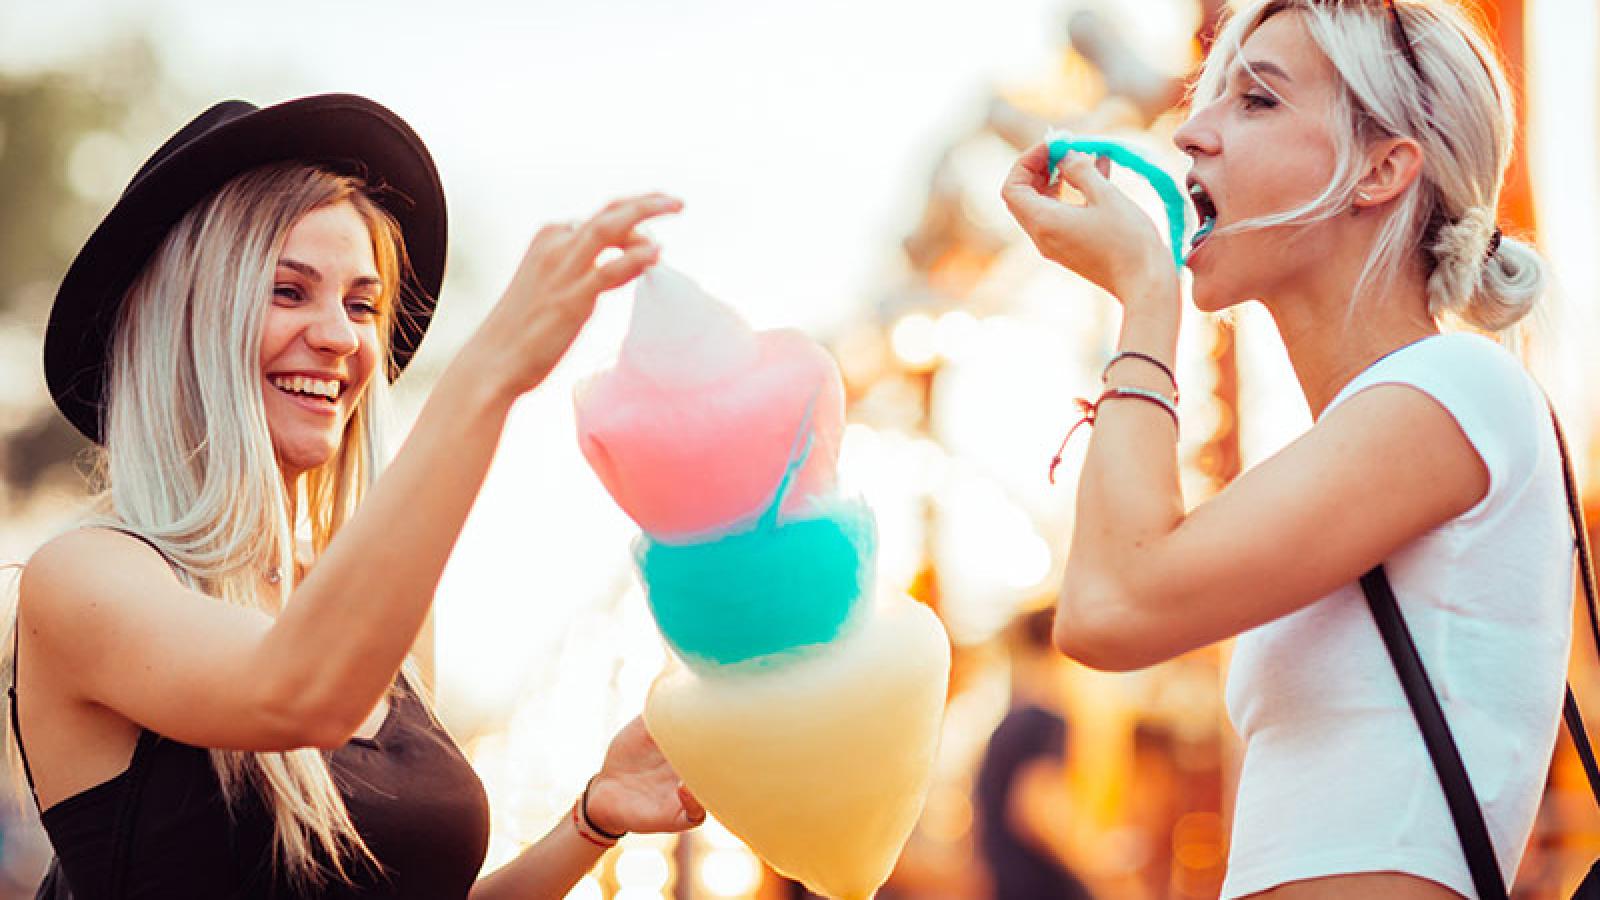 Does Summer Fun Doom Your Diet?